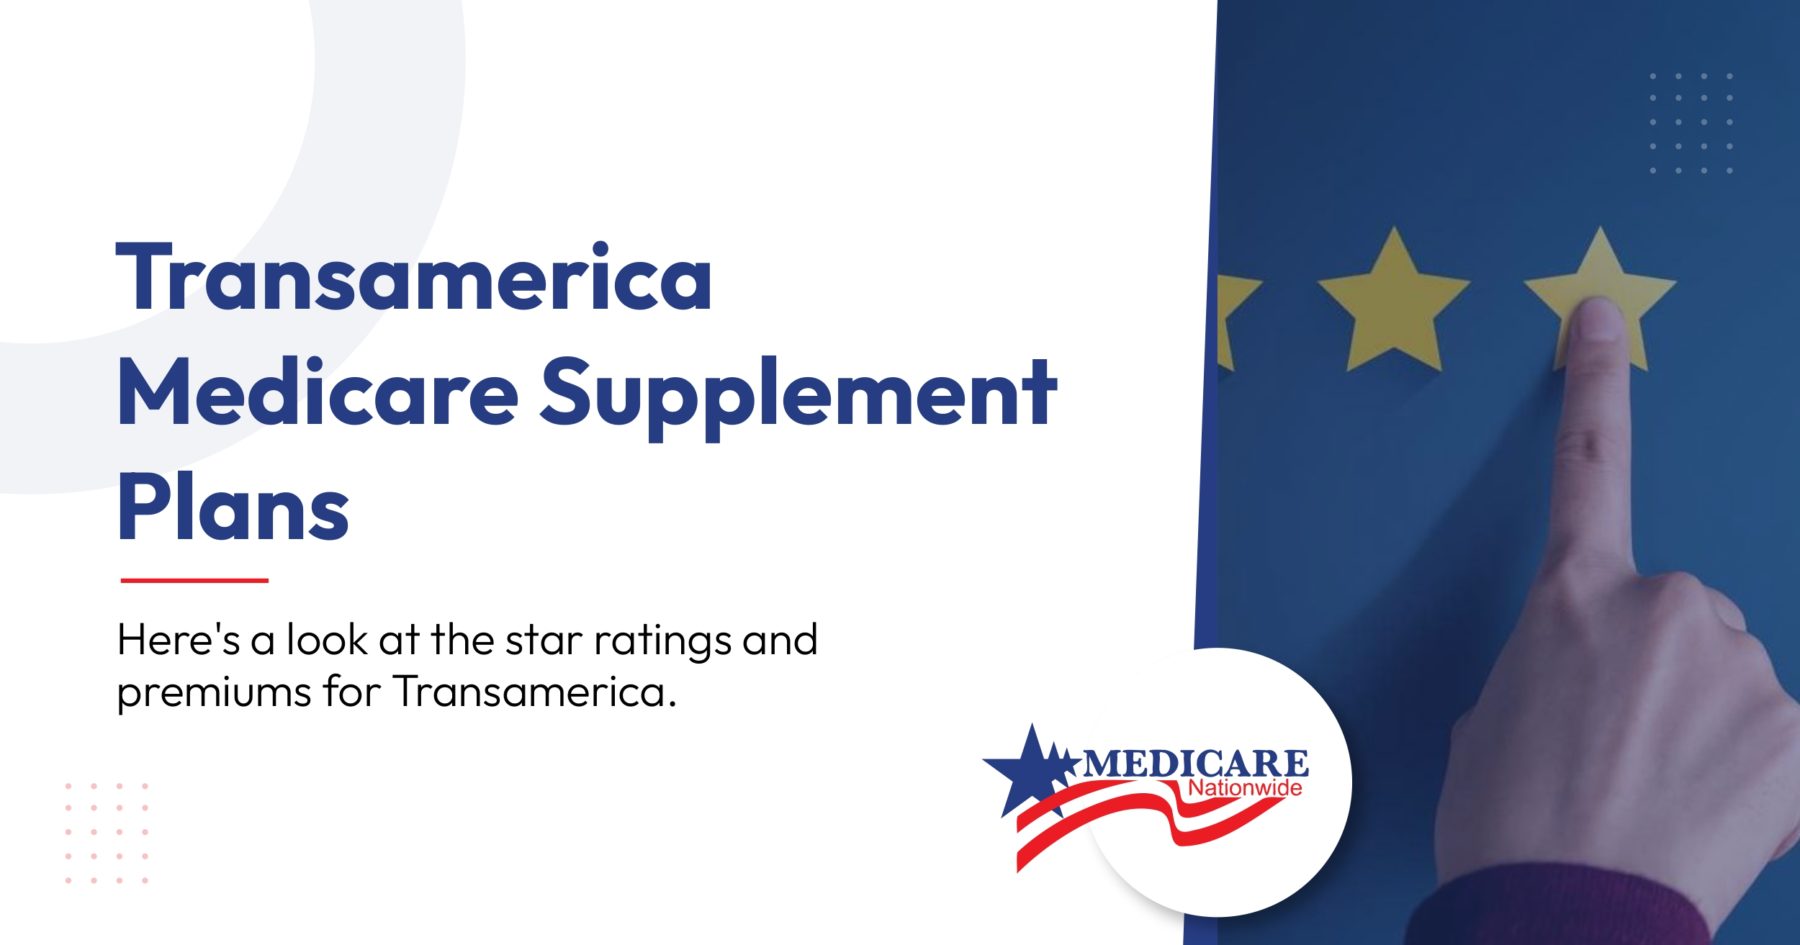 Transamerica Medicare Supplement Plans